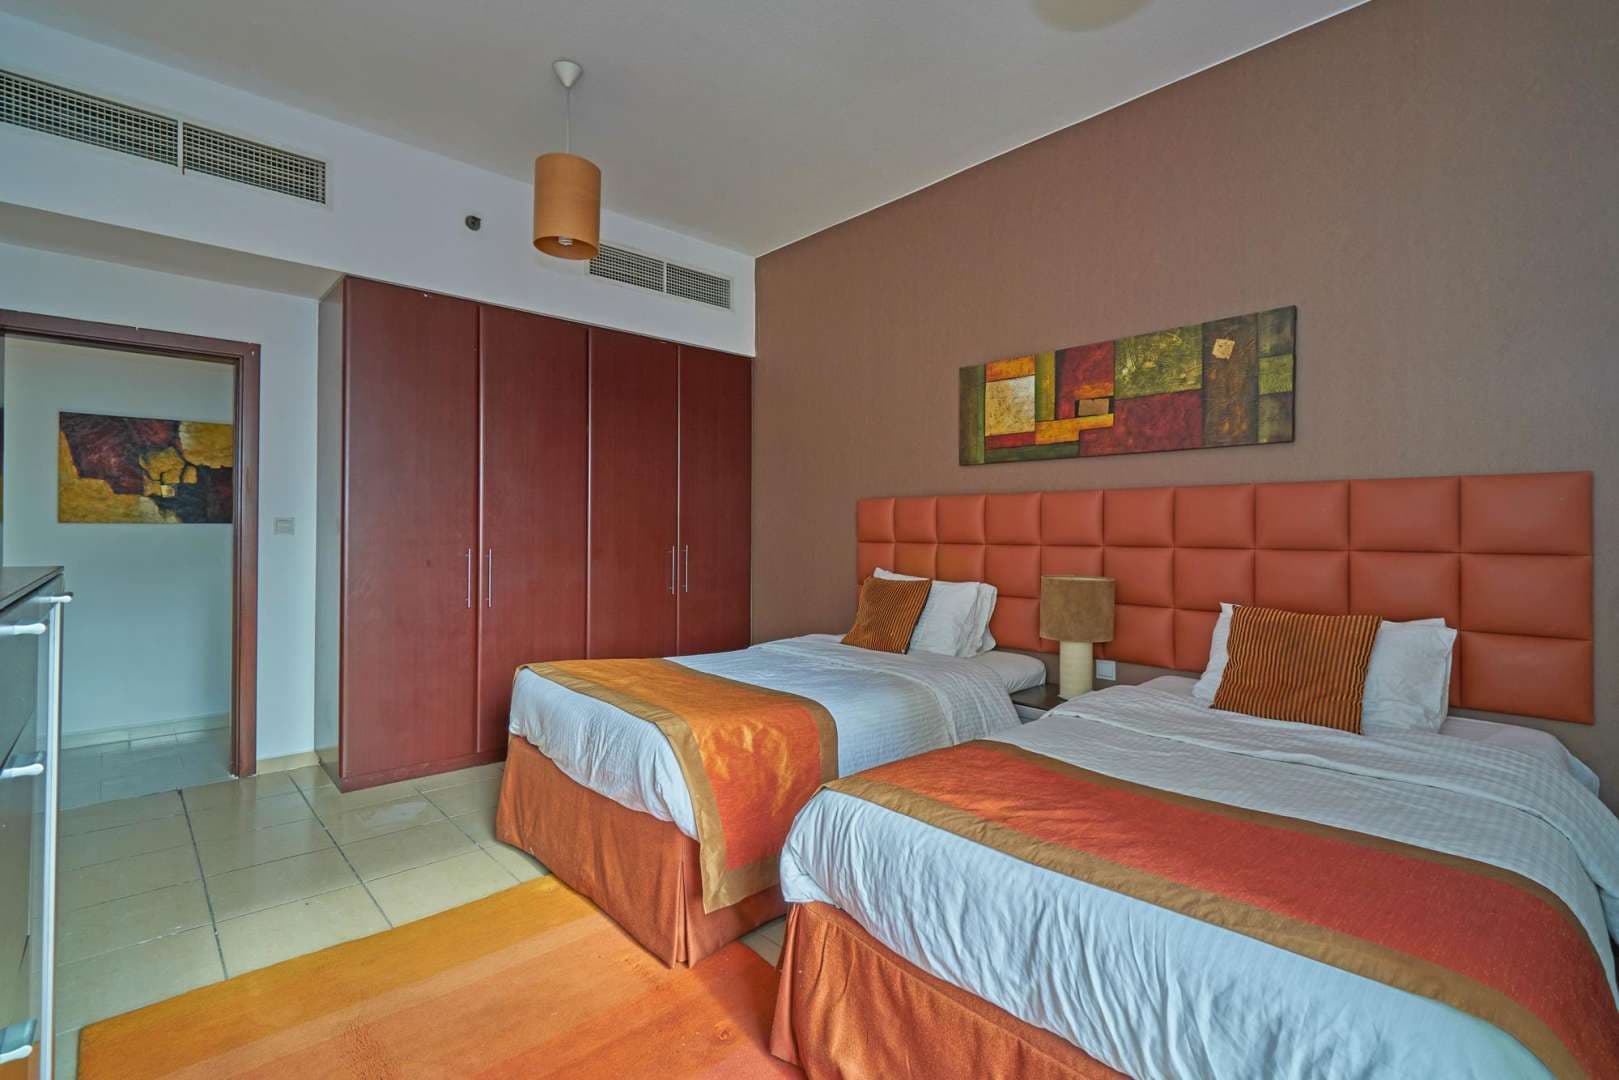 2 Bedroom Apartment For Rent Shams Lp05258 106877b38a09e10.jpg